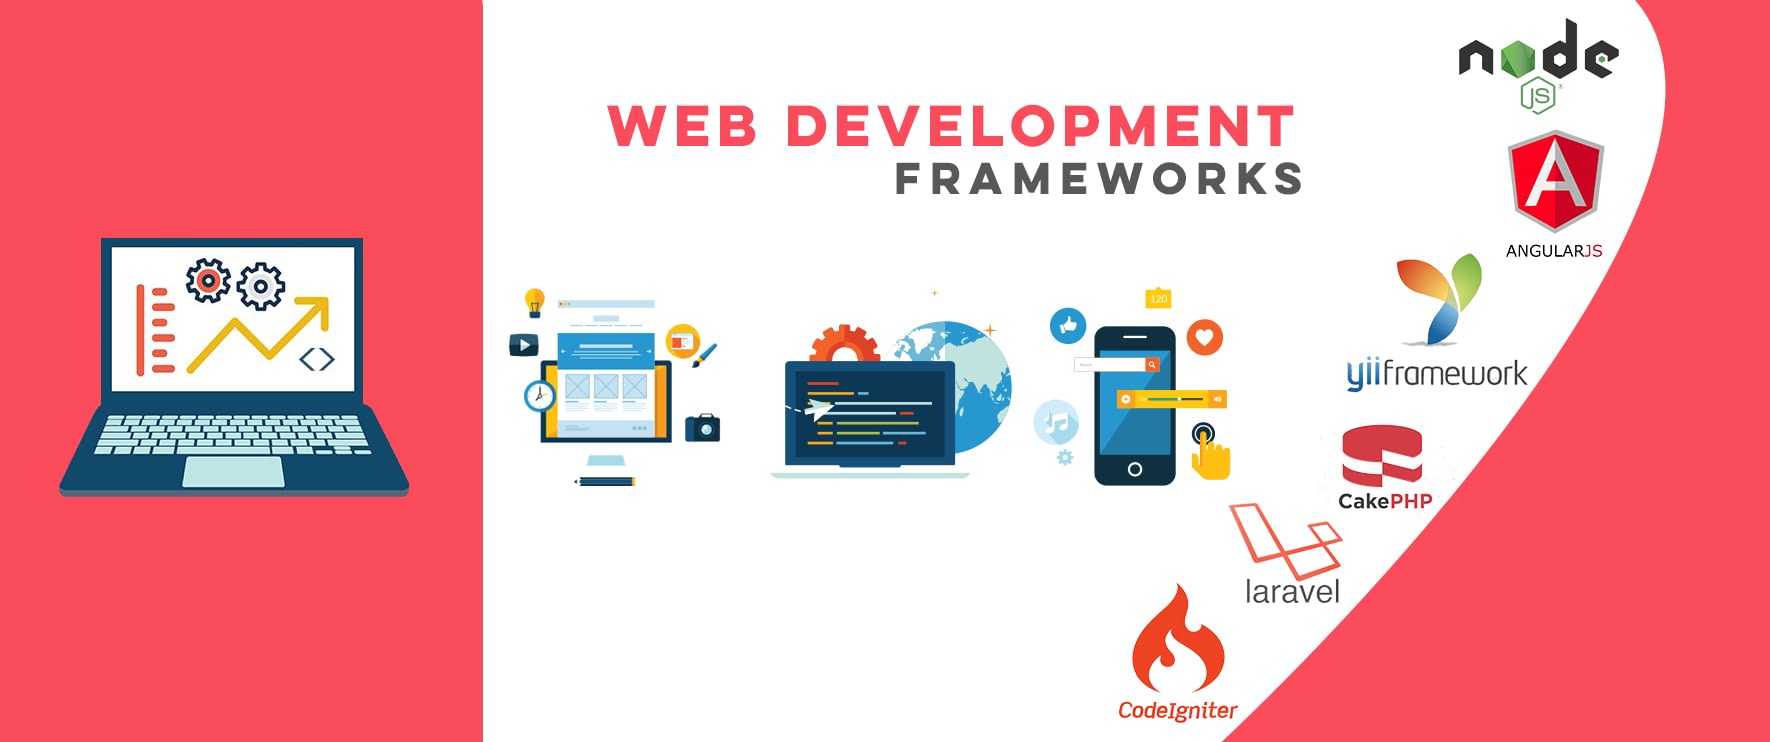 Web Development frameworks